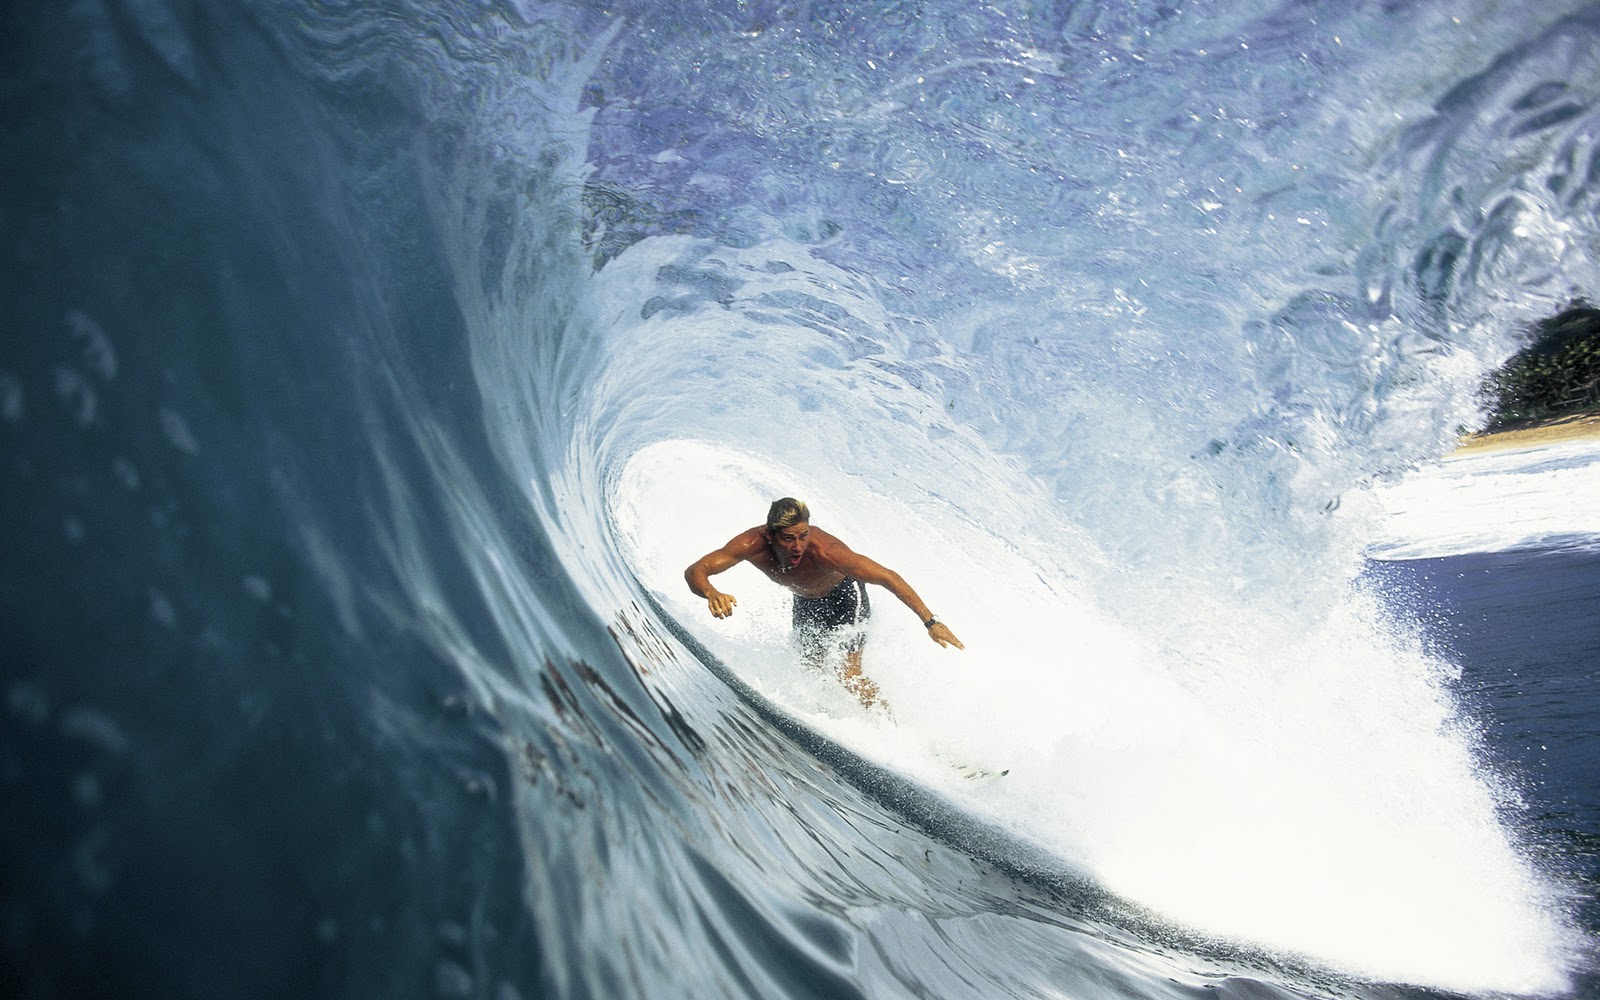 wallpaper alta definição,surfing,wave,surfing equipment,boardsport,surfboard